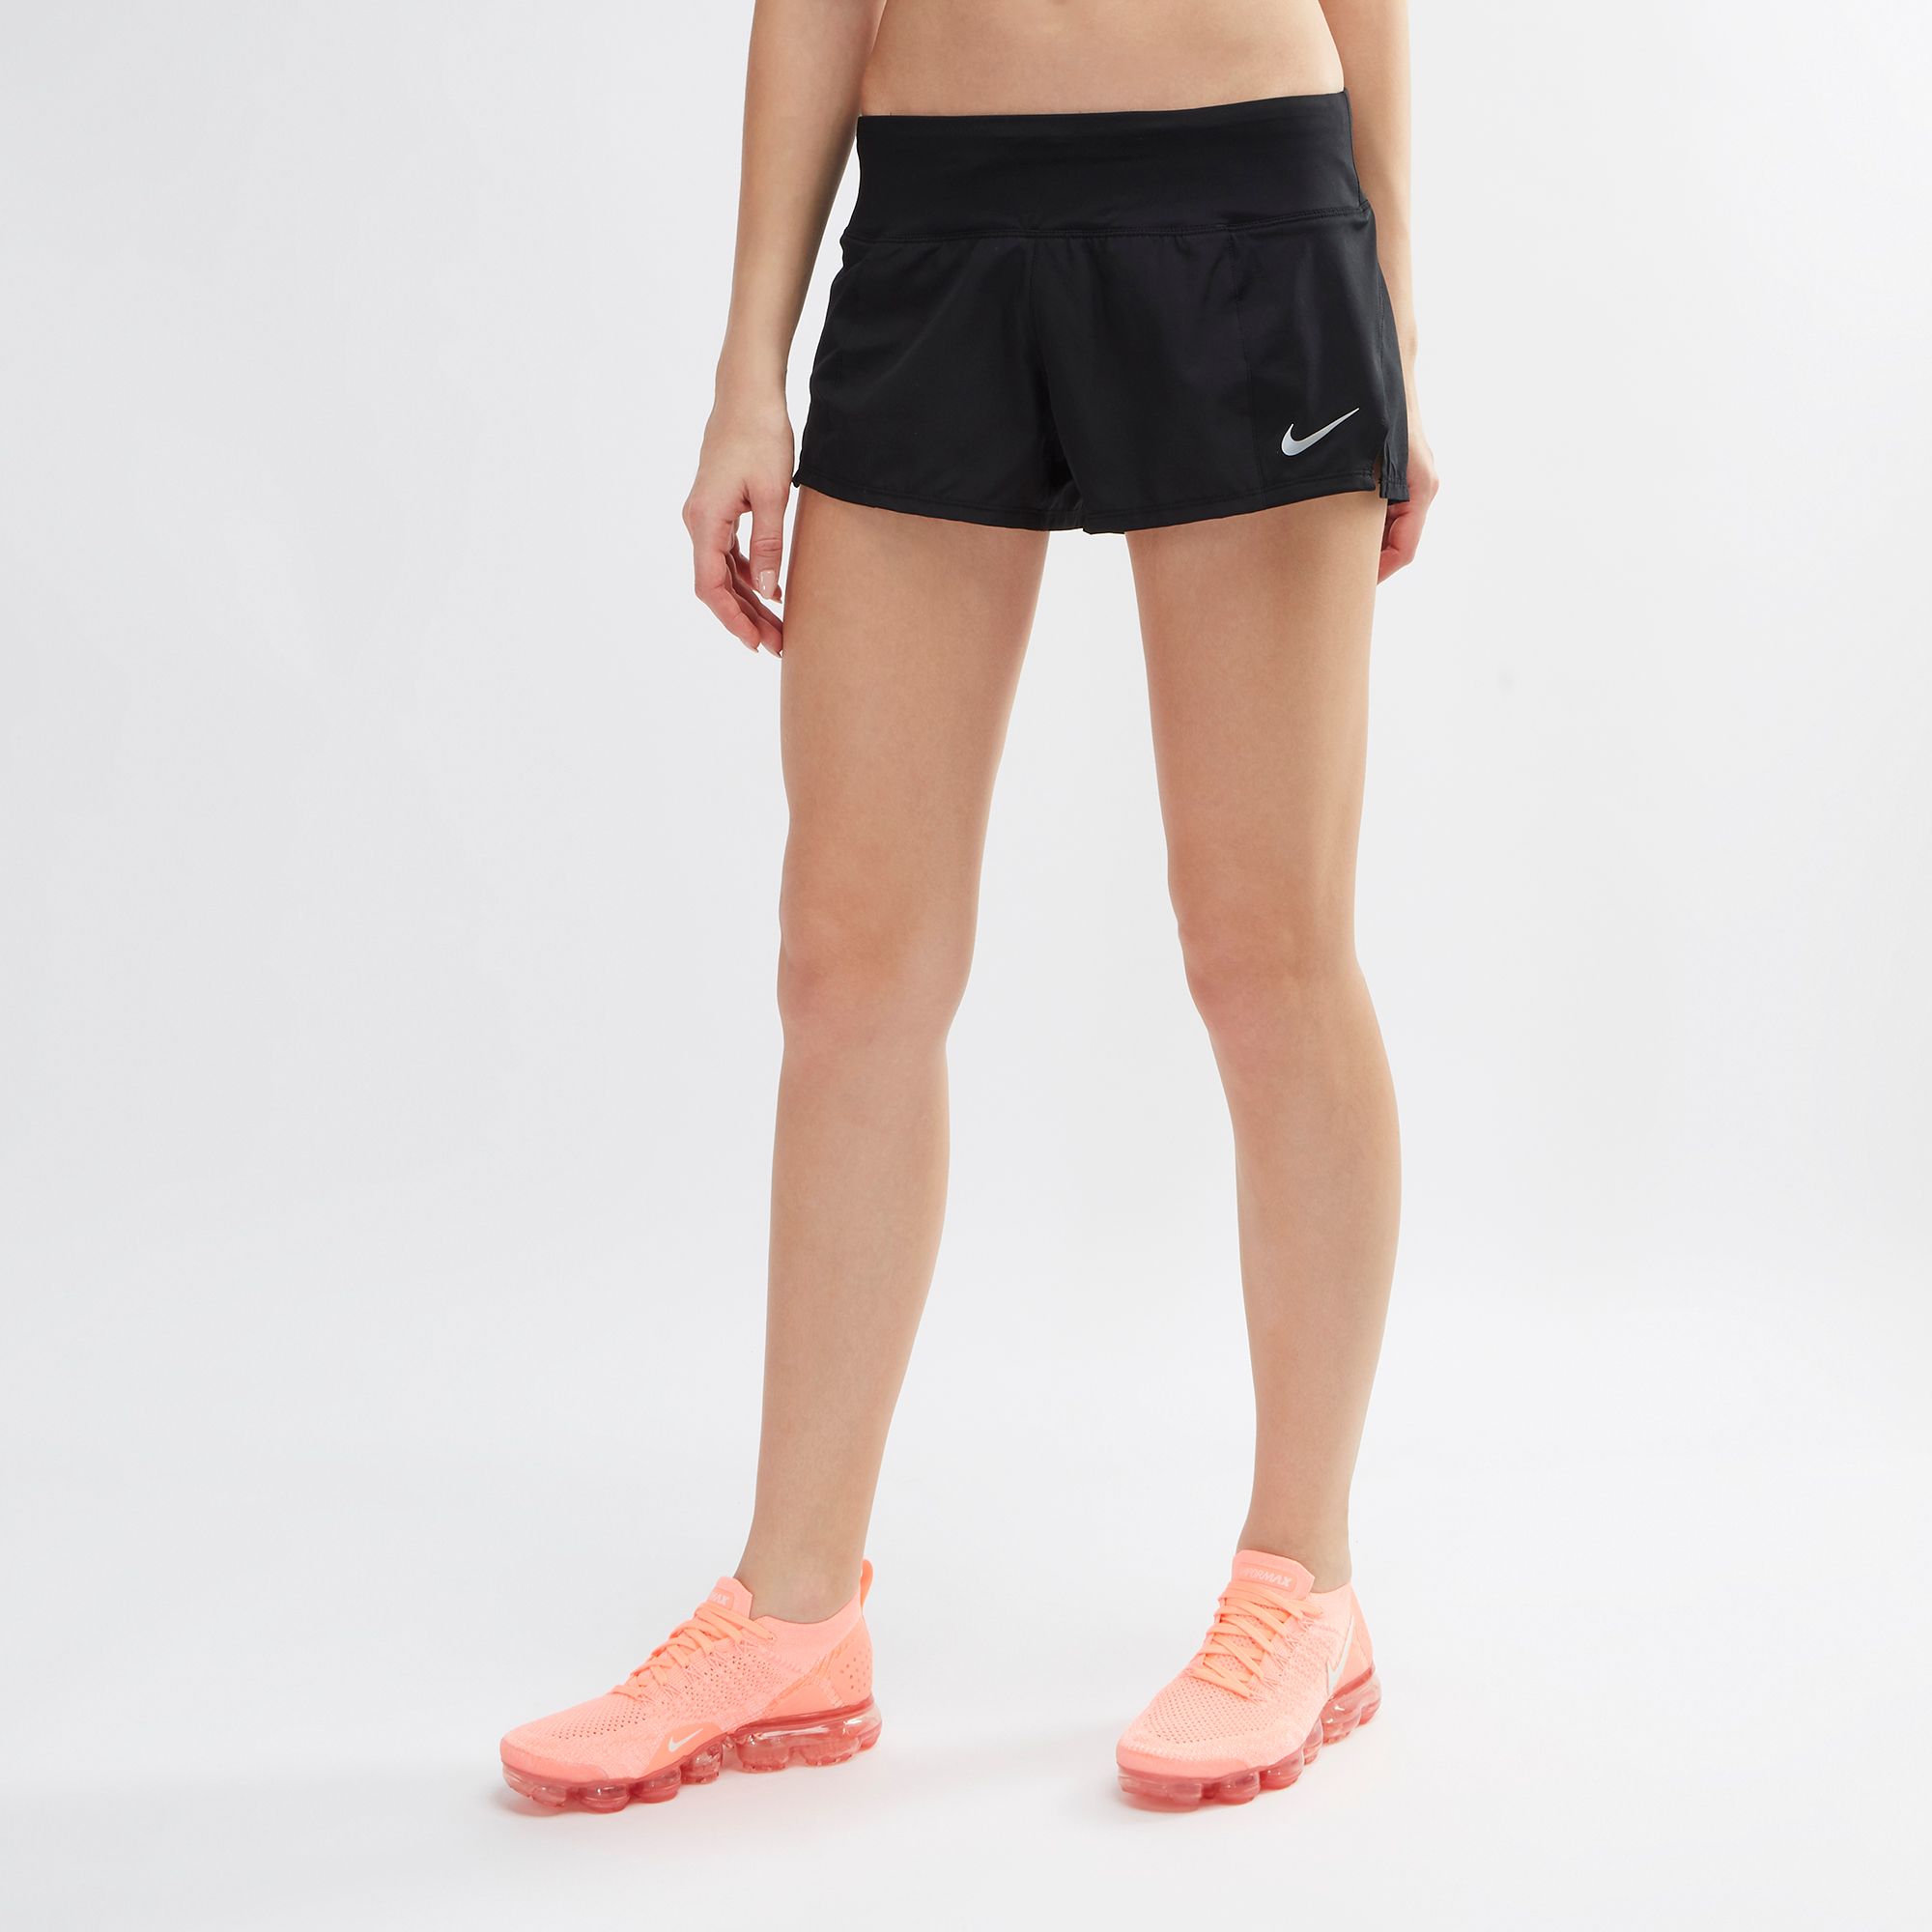 Nike Womens Crew 2 Shorts Shorts Sports 